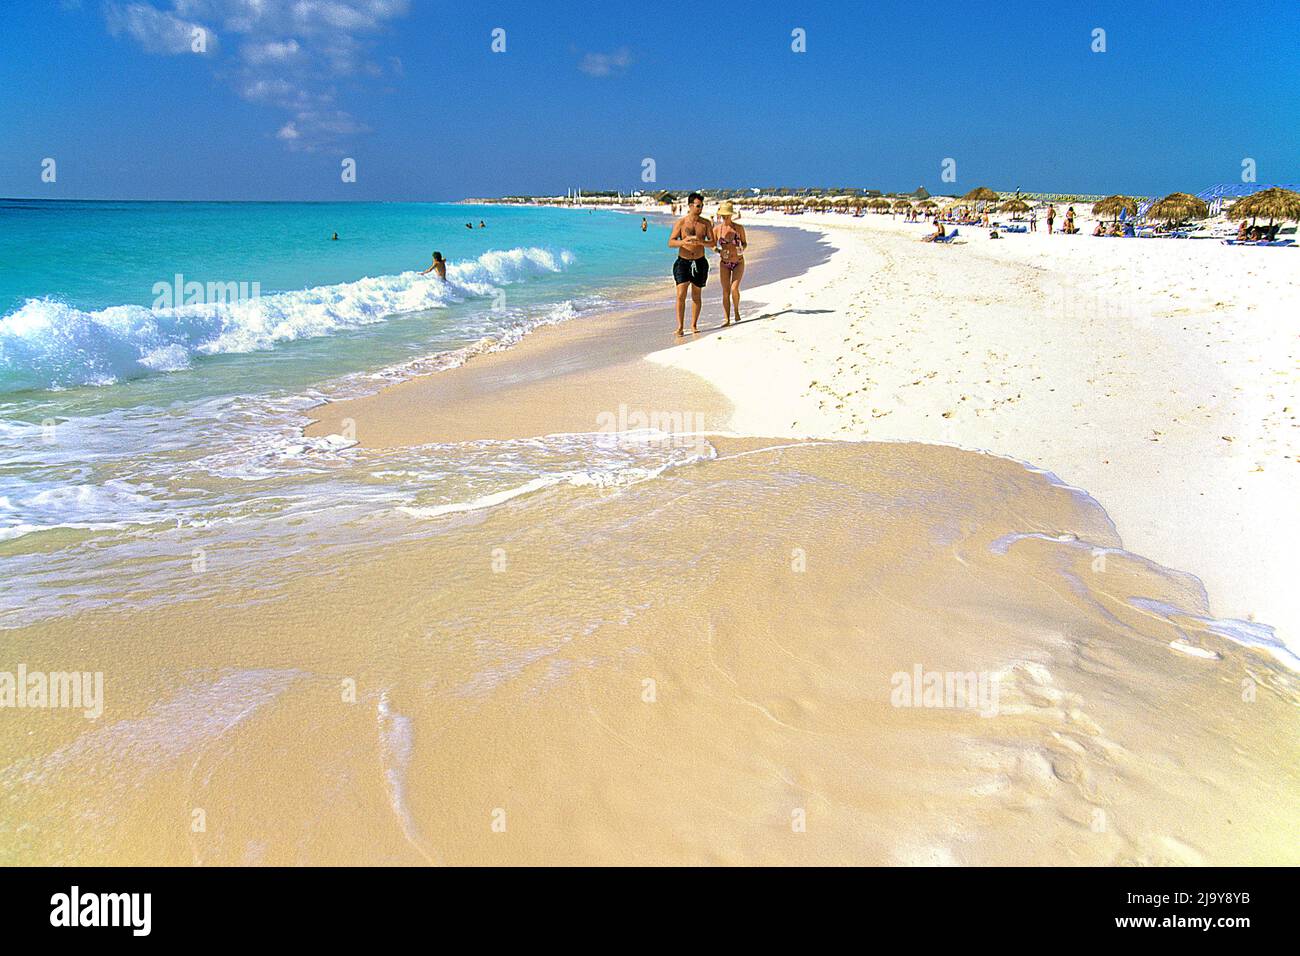 Strandleben bei Cayo Largo, Kuba, Karibik | Strandleben in Cayo Largo, Kuba, Karibik Stockfoto